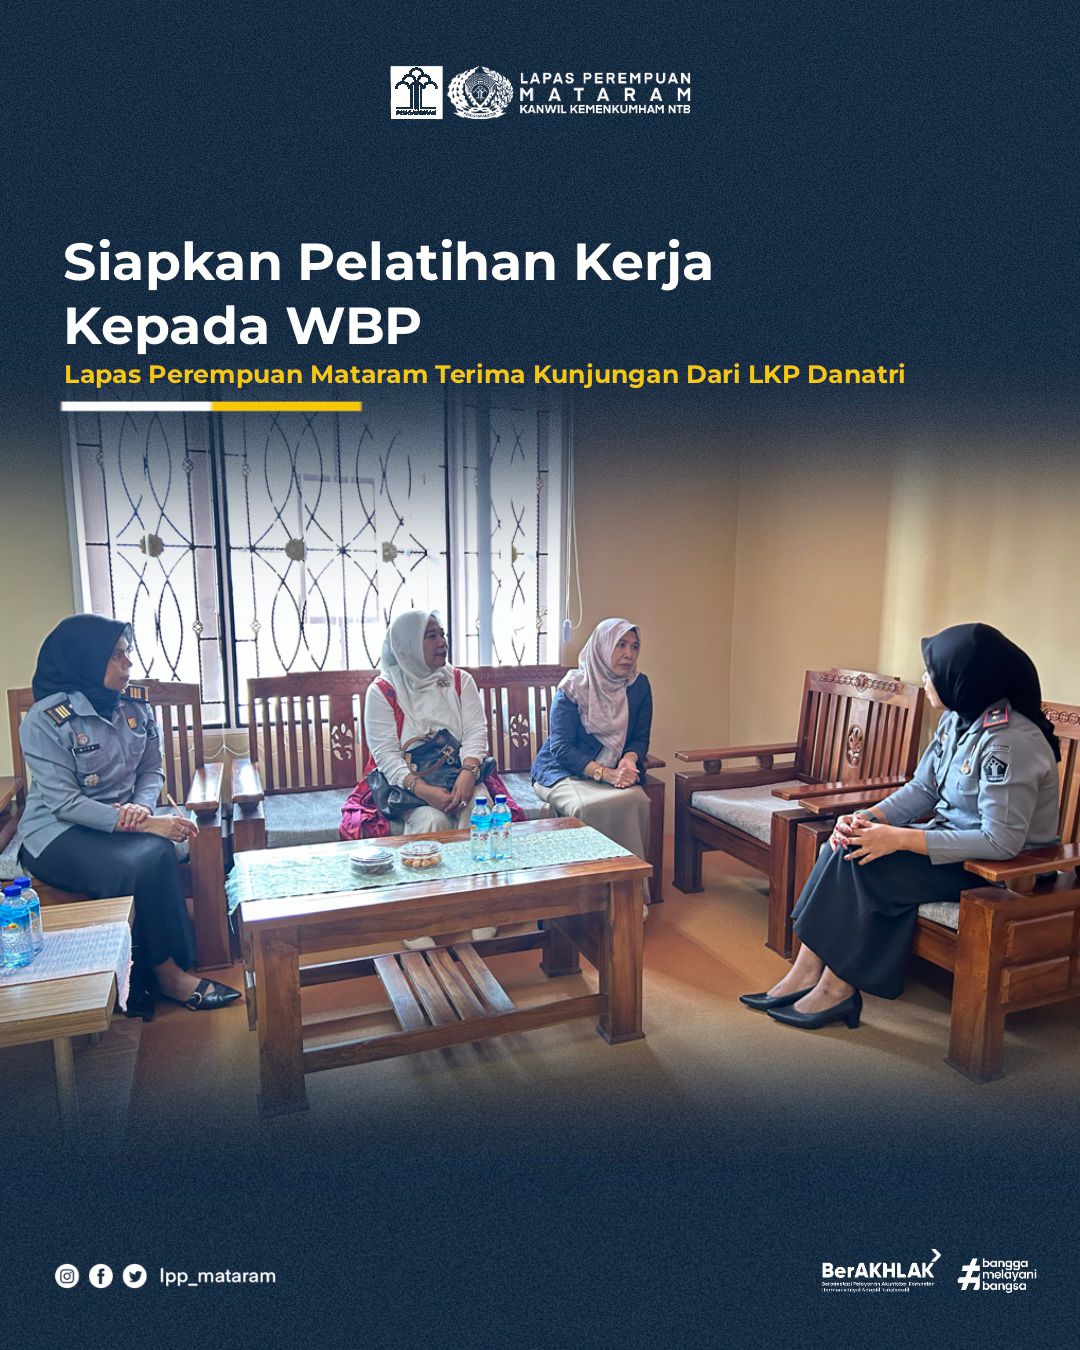 Siapkan Pelatihan Kerja Kepada WBP, Lapas Perempuan Mataram Terima Kunjungan Dari LKP Danatri